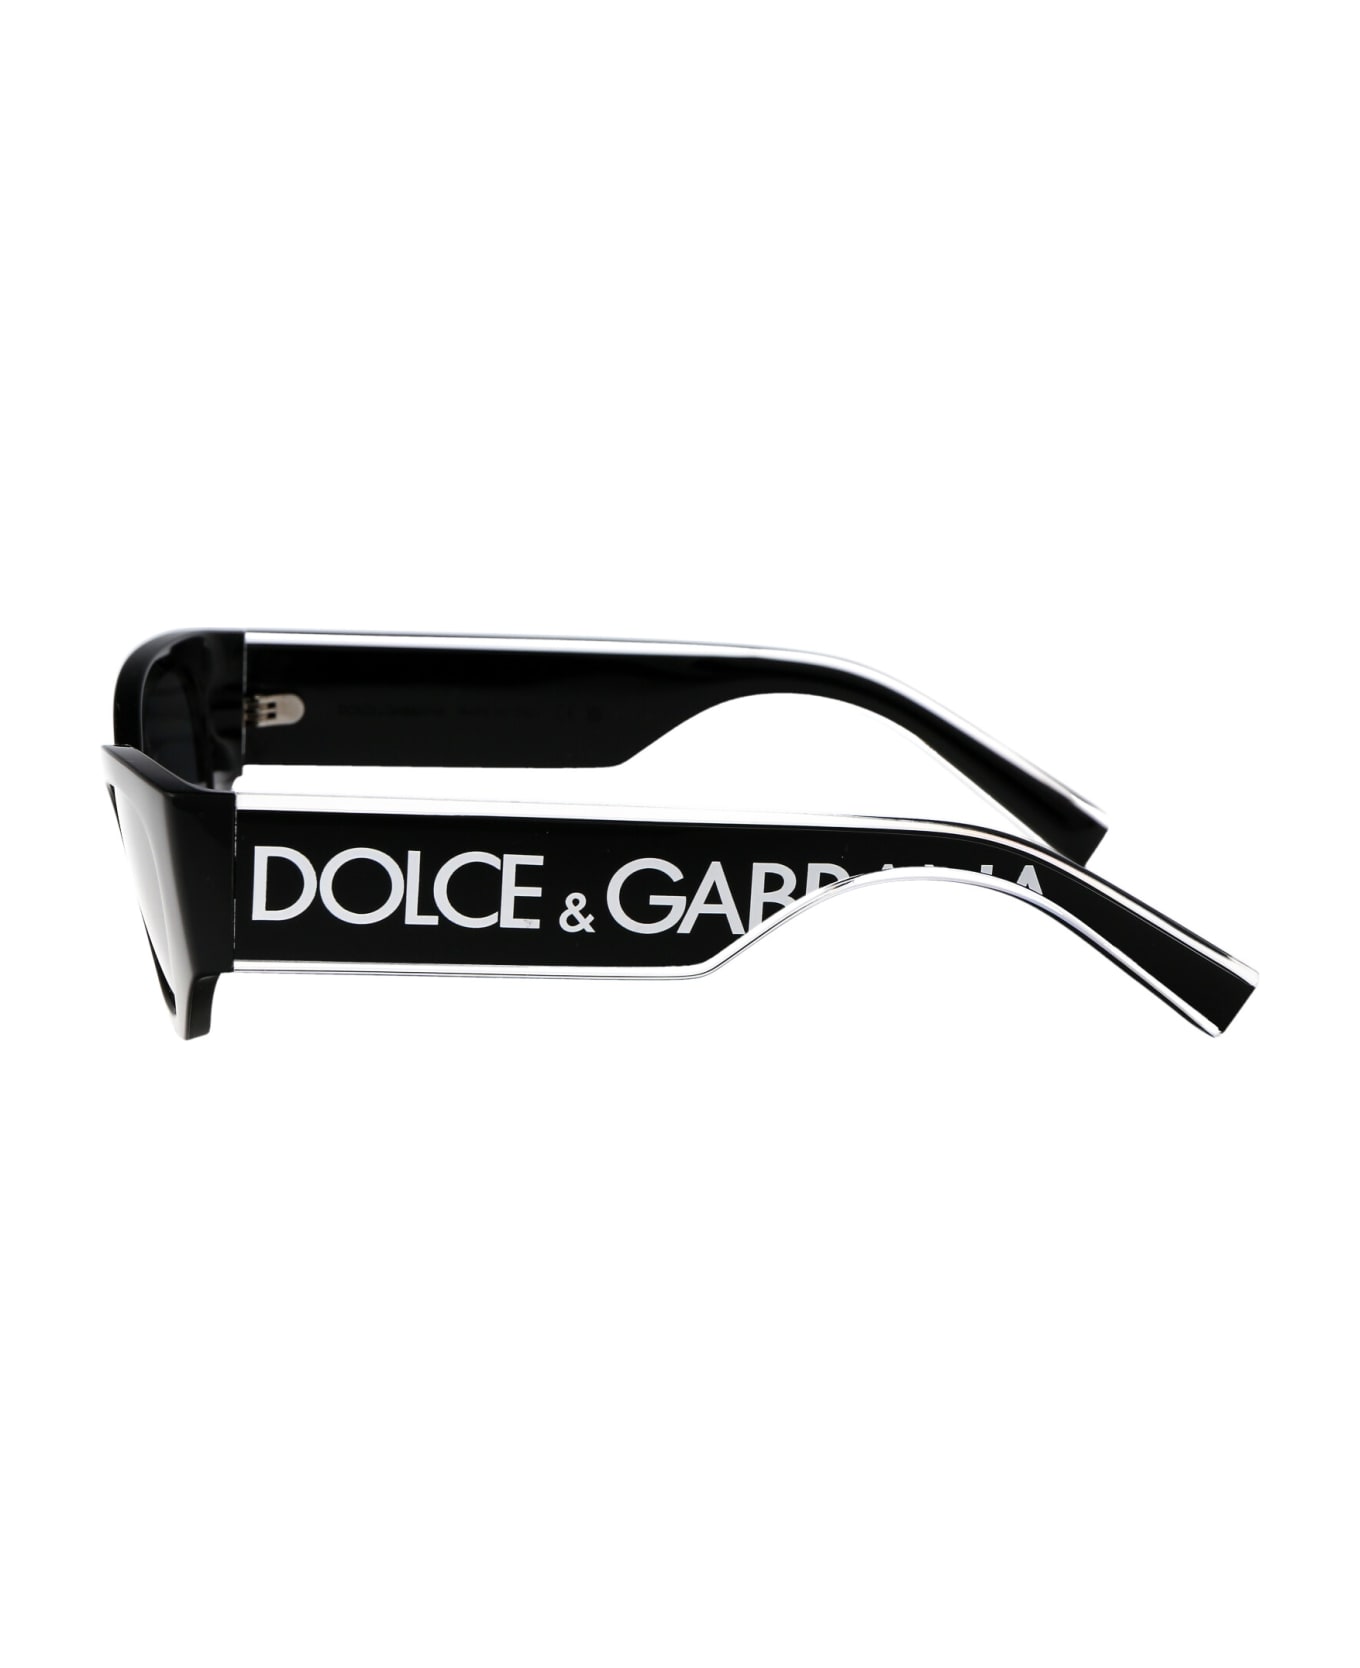 Dolce & Gabbana Eyewear 0dg6186 Sunglasses - 501/87 BLACK